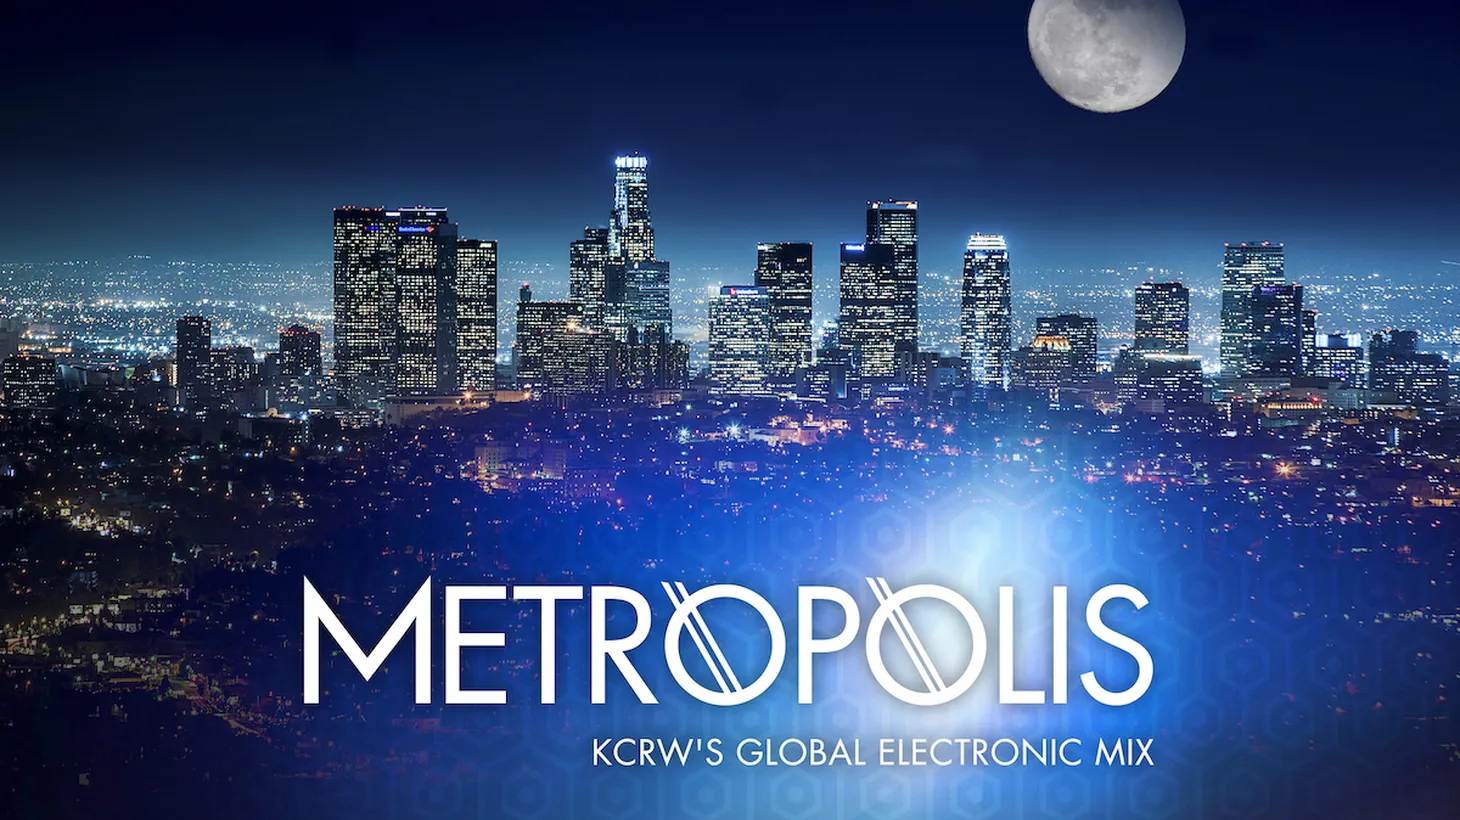 Metropolis playlist, September 11, 2021.